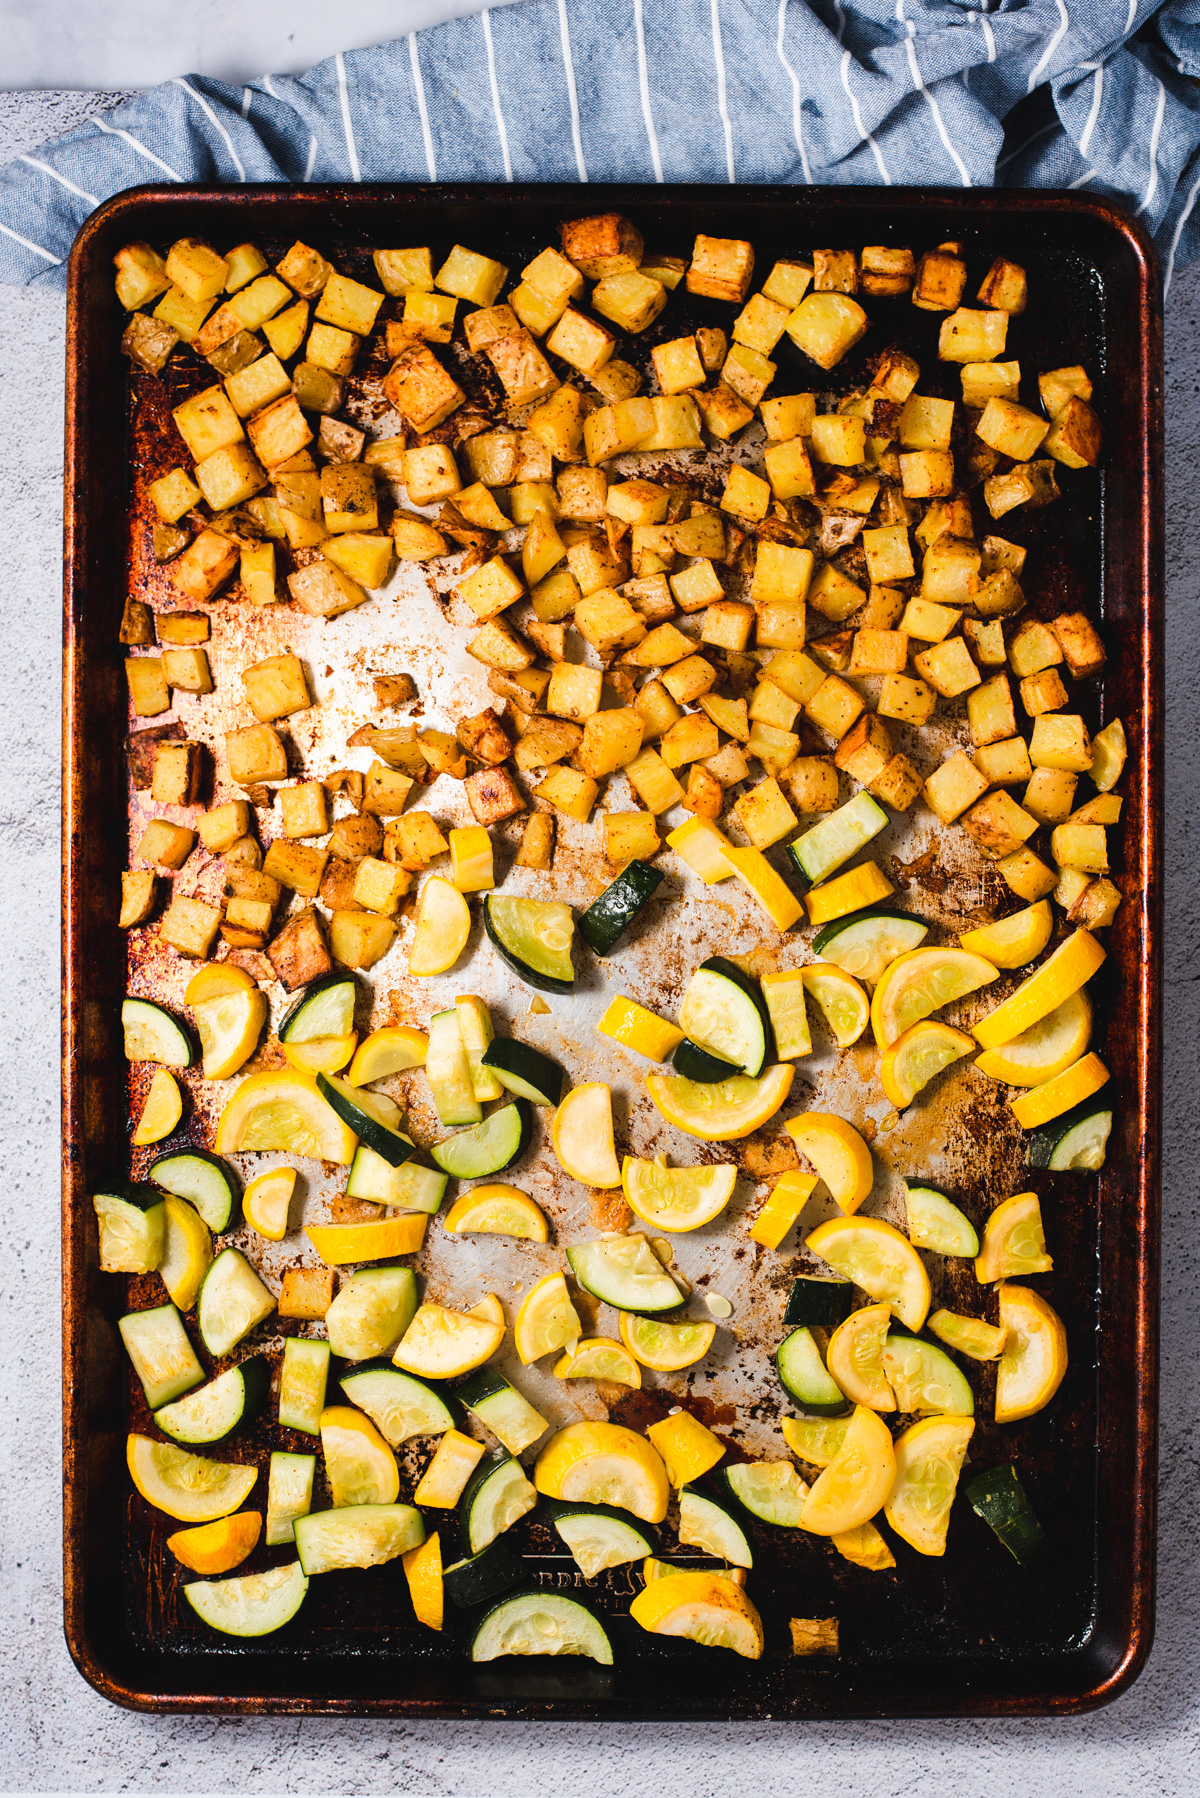 Sliced squash, zucchini, and potatoes on a metal sheet pan.